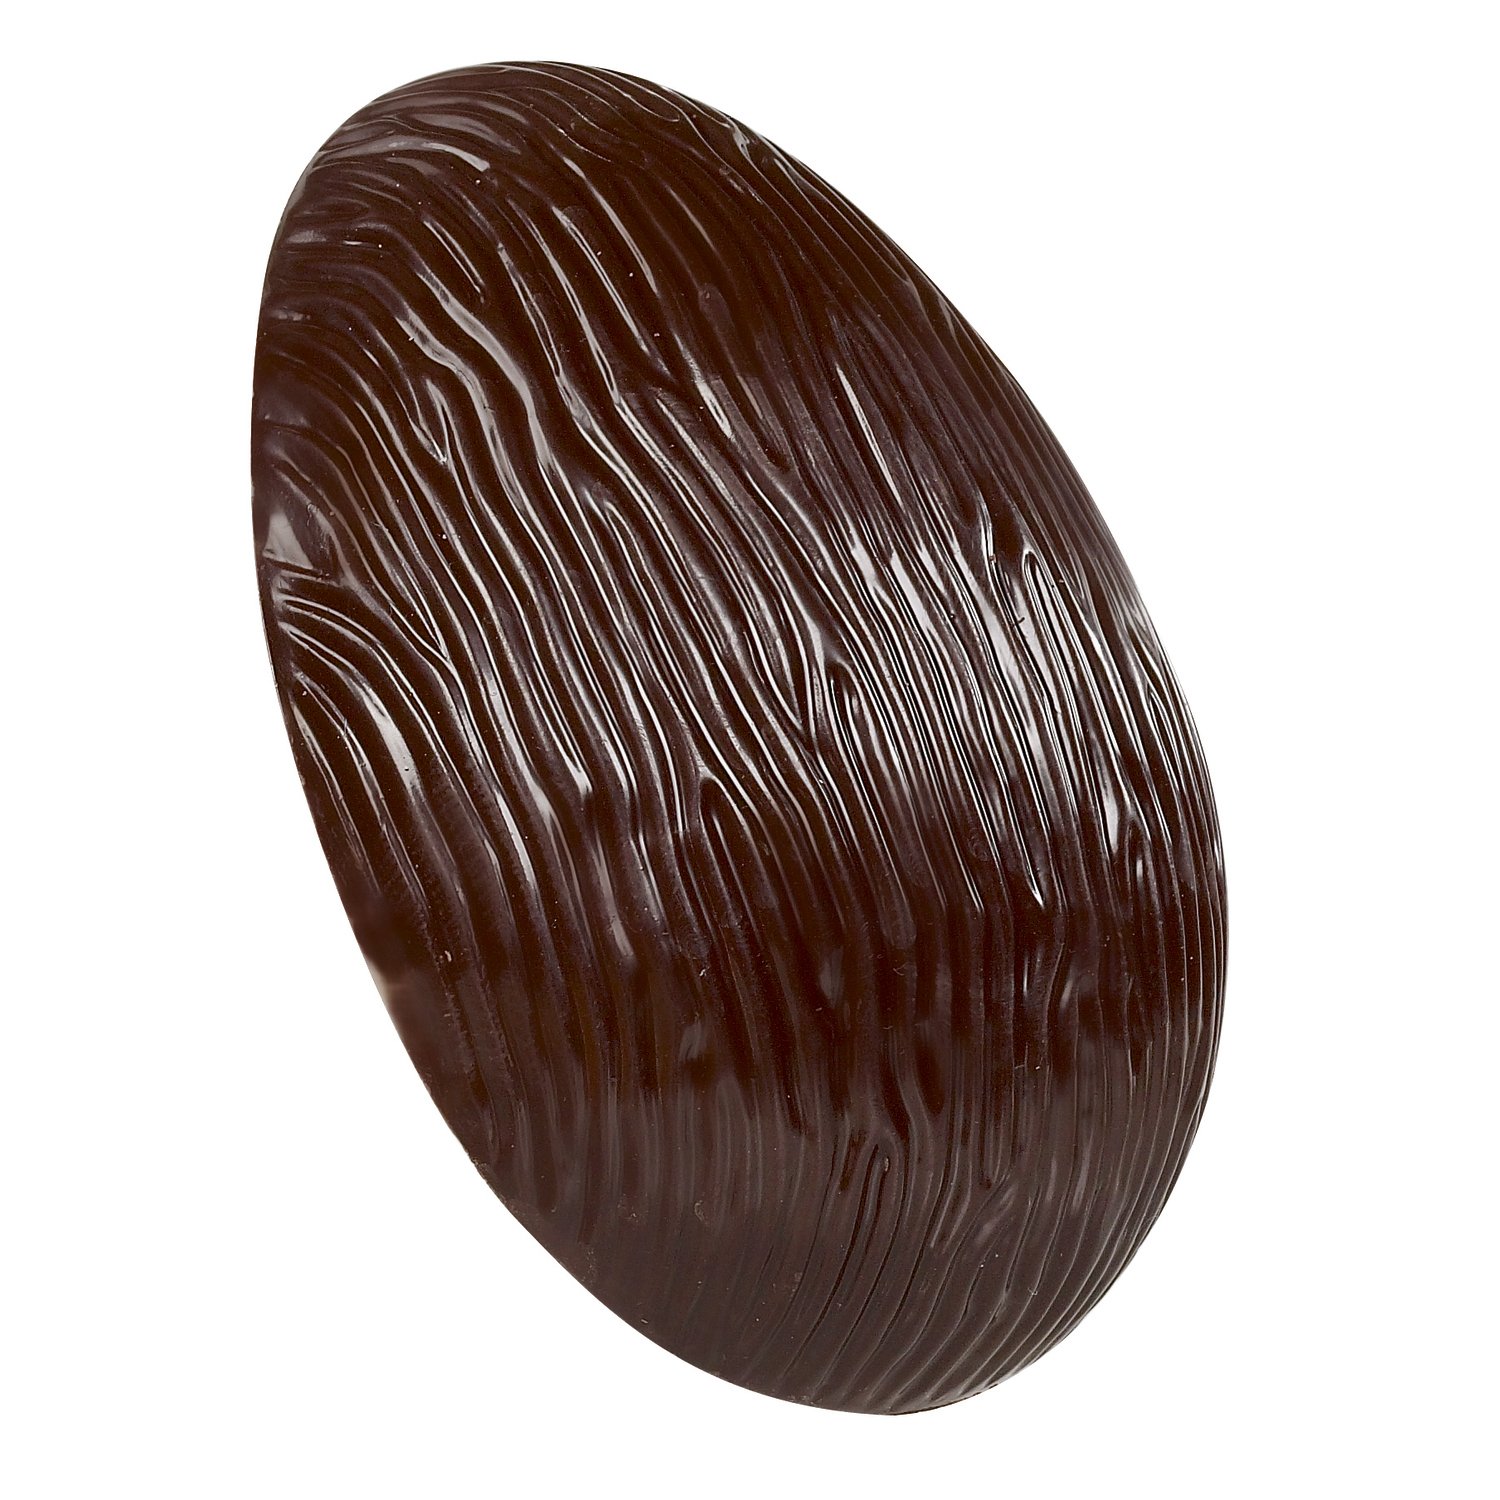 17.5cm bark half egg shells - dark - 6x140g